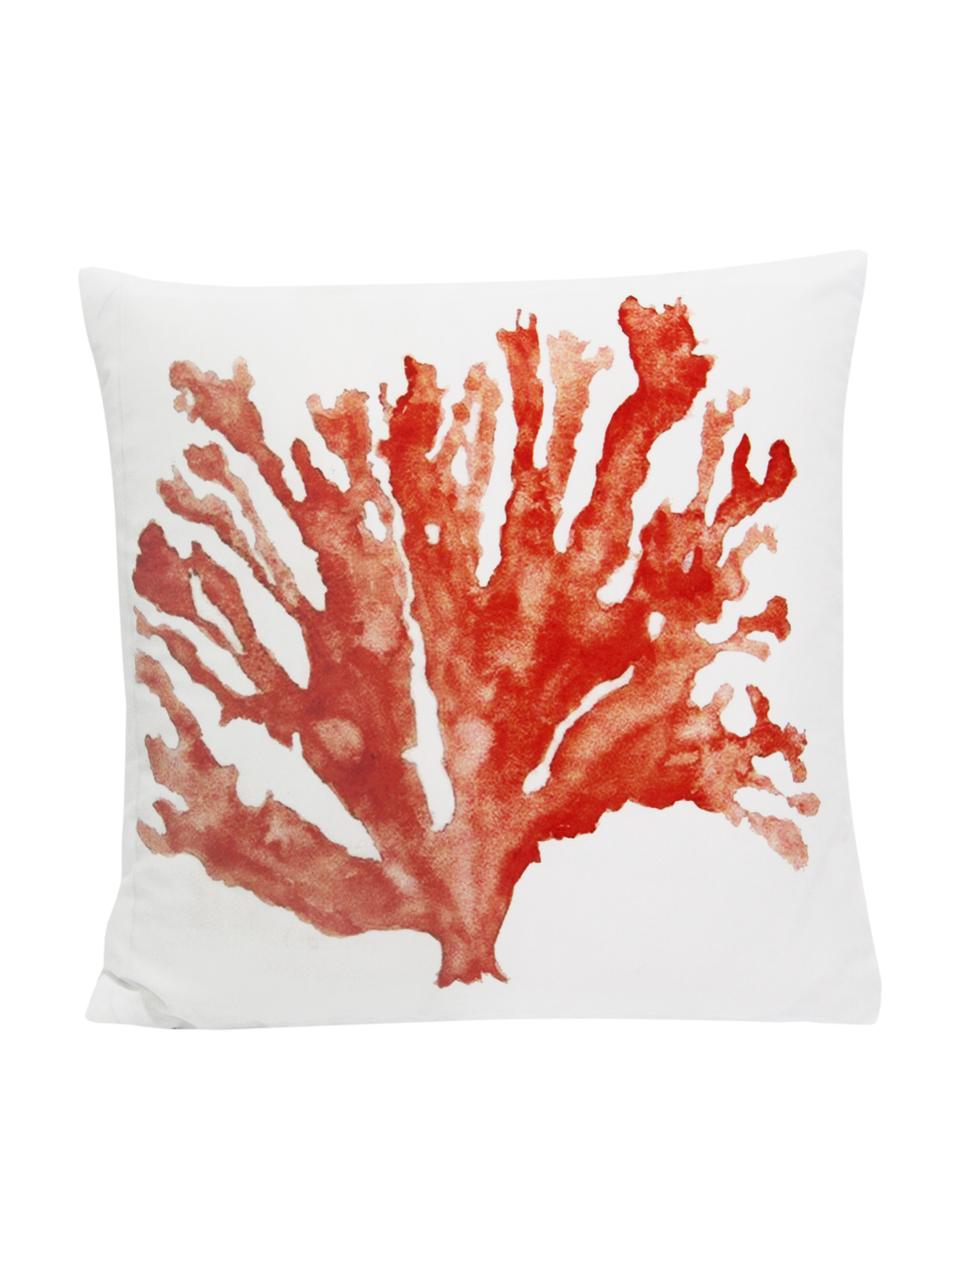 Kissenhülle Coral mit Korallenprint, 100% Polyester, Weiß, Koralle, 45 x 45 cm